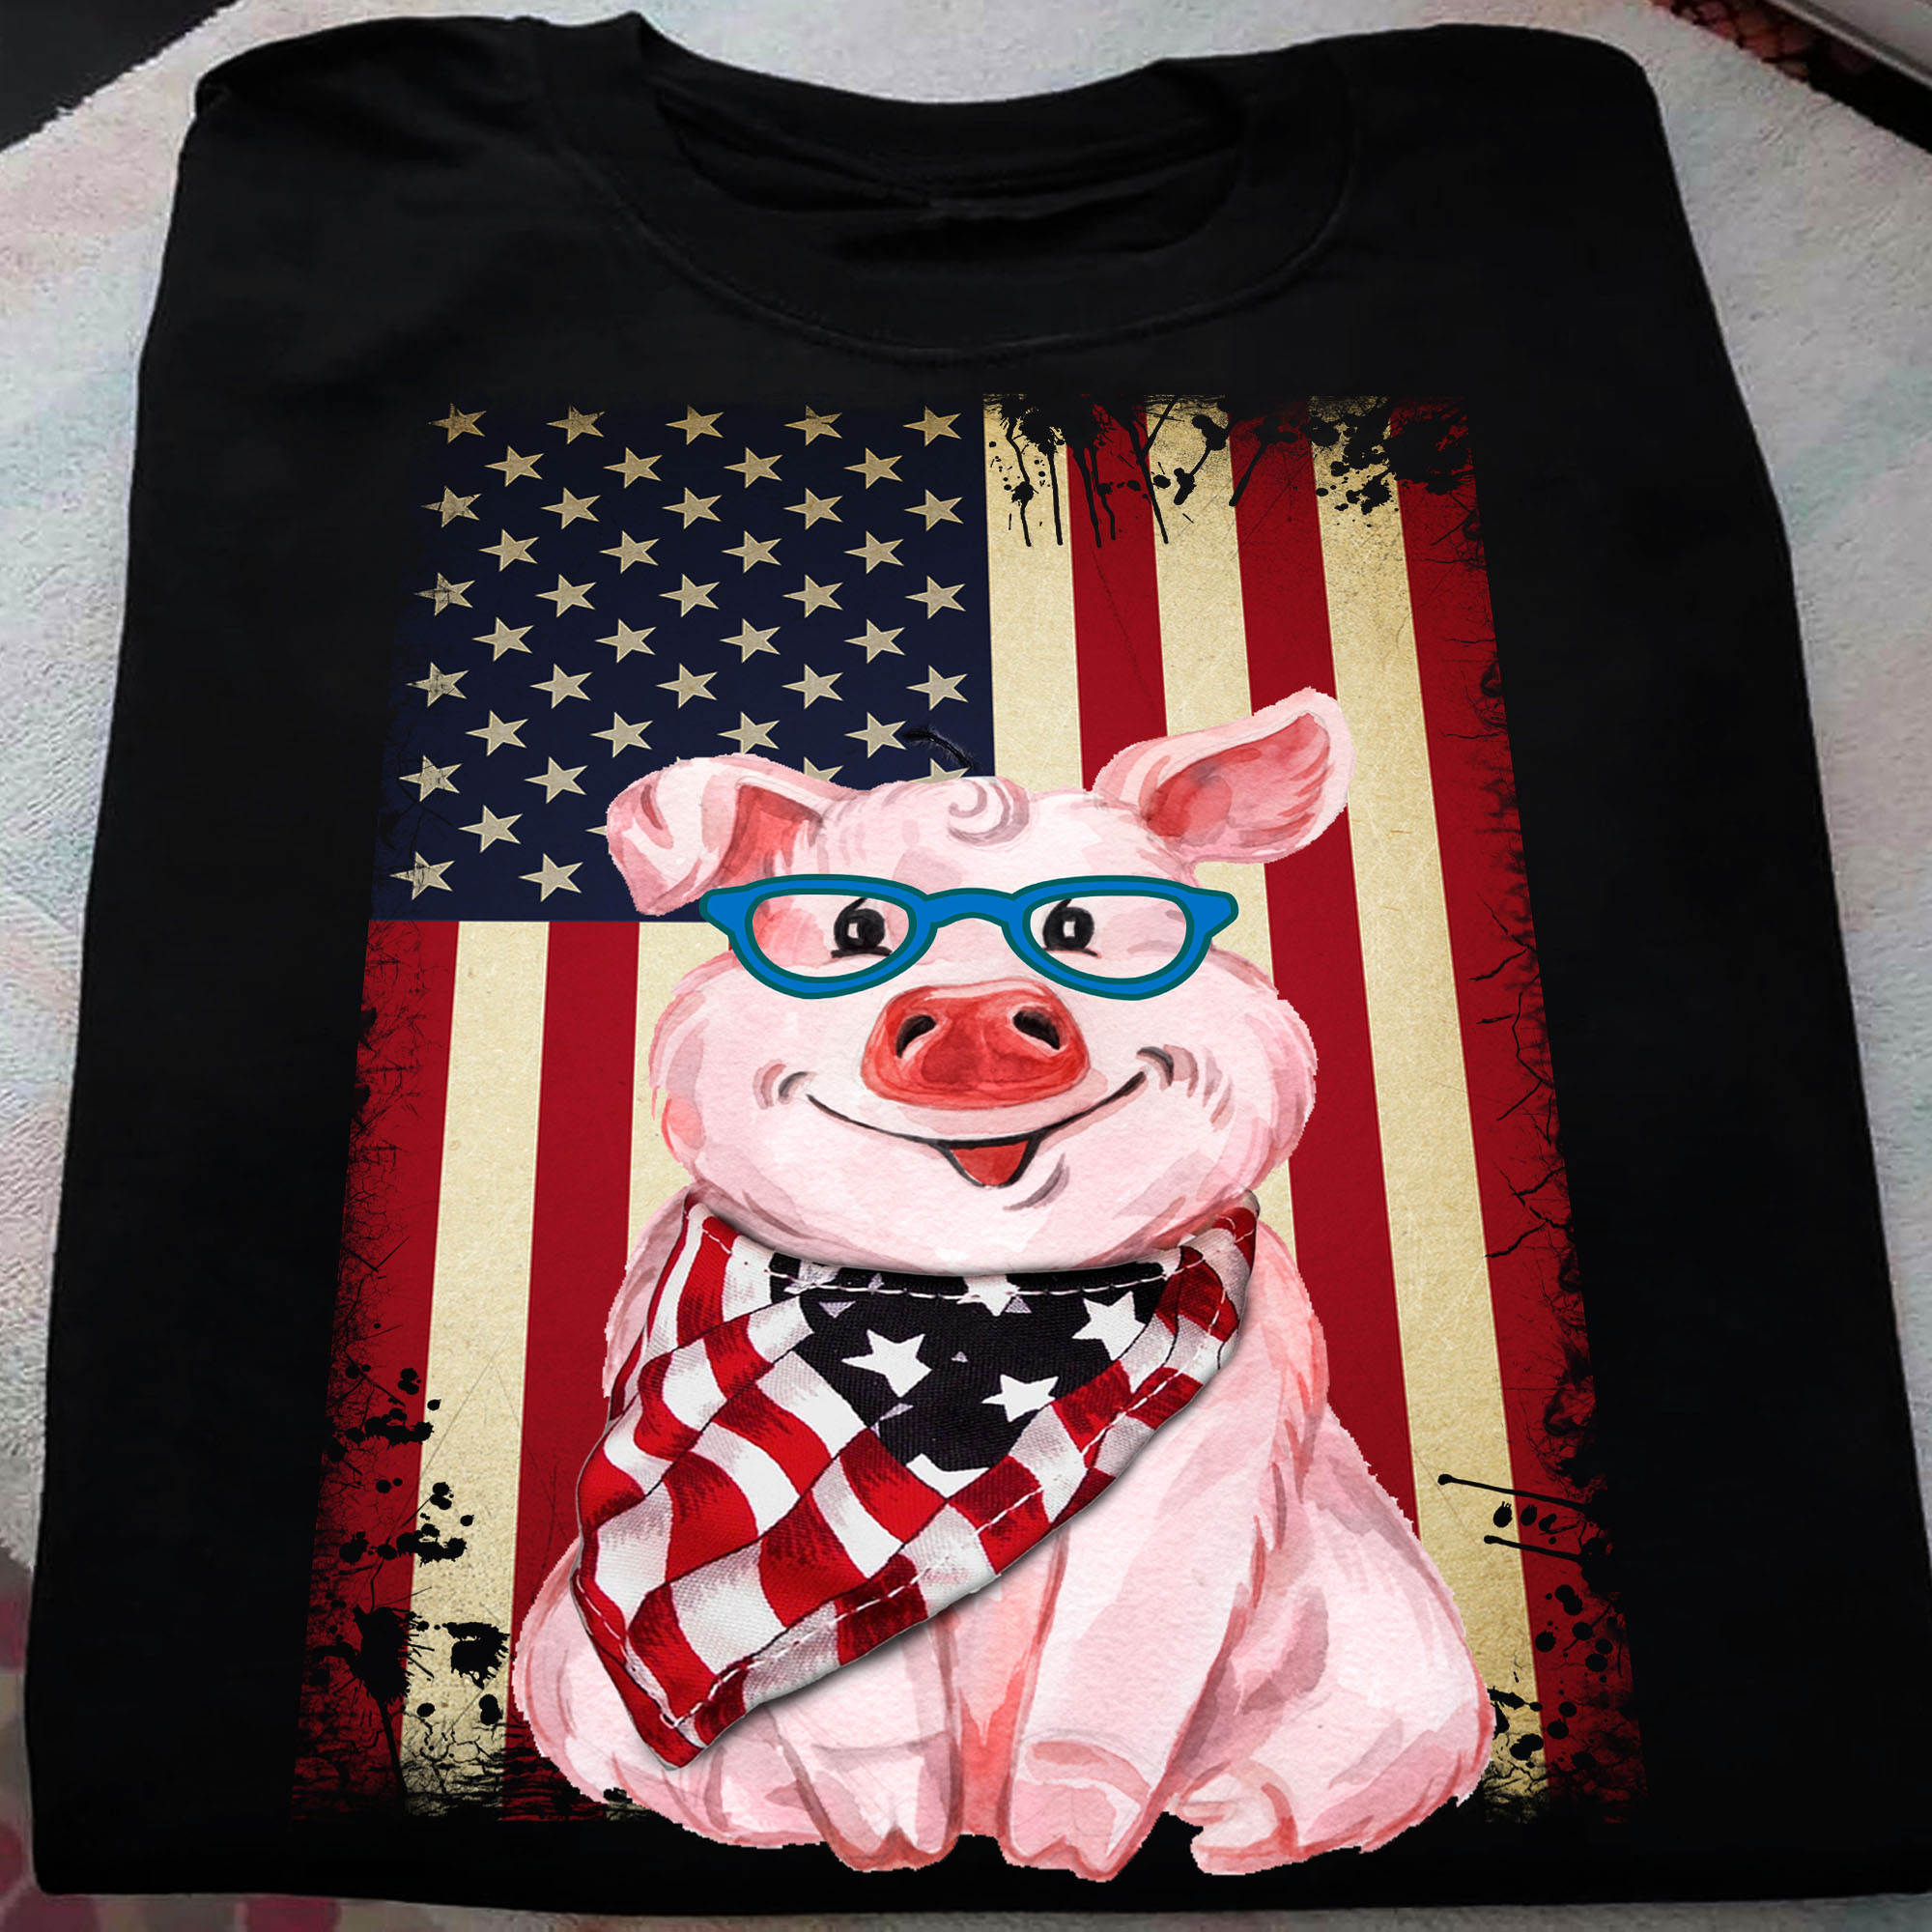 America flag - Grumpy pig with america flag